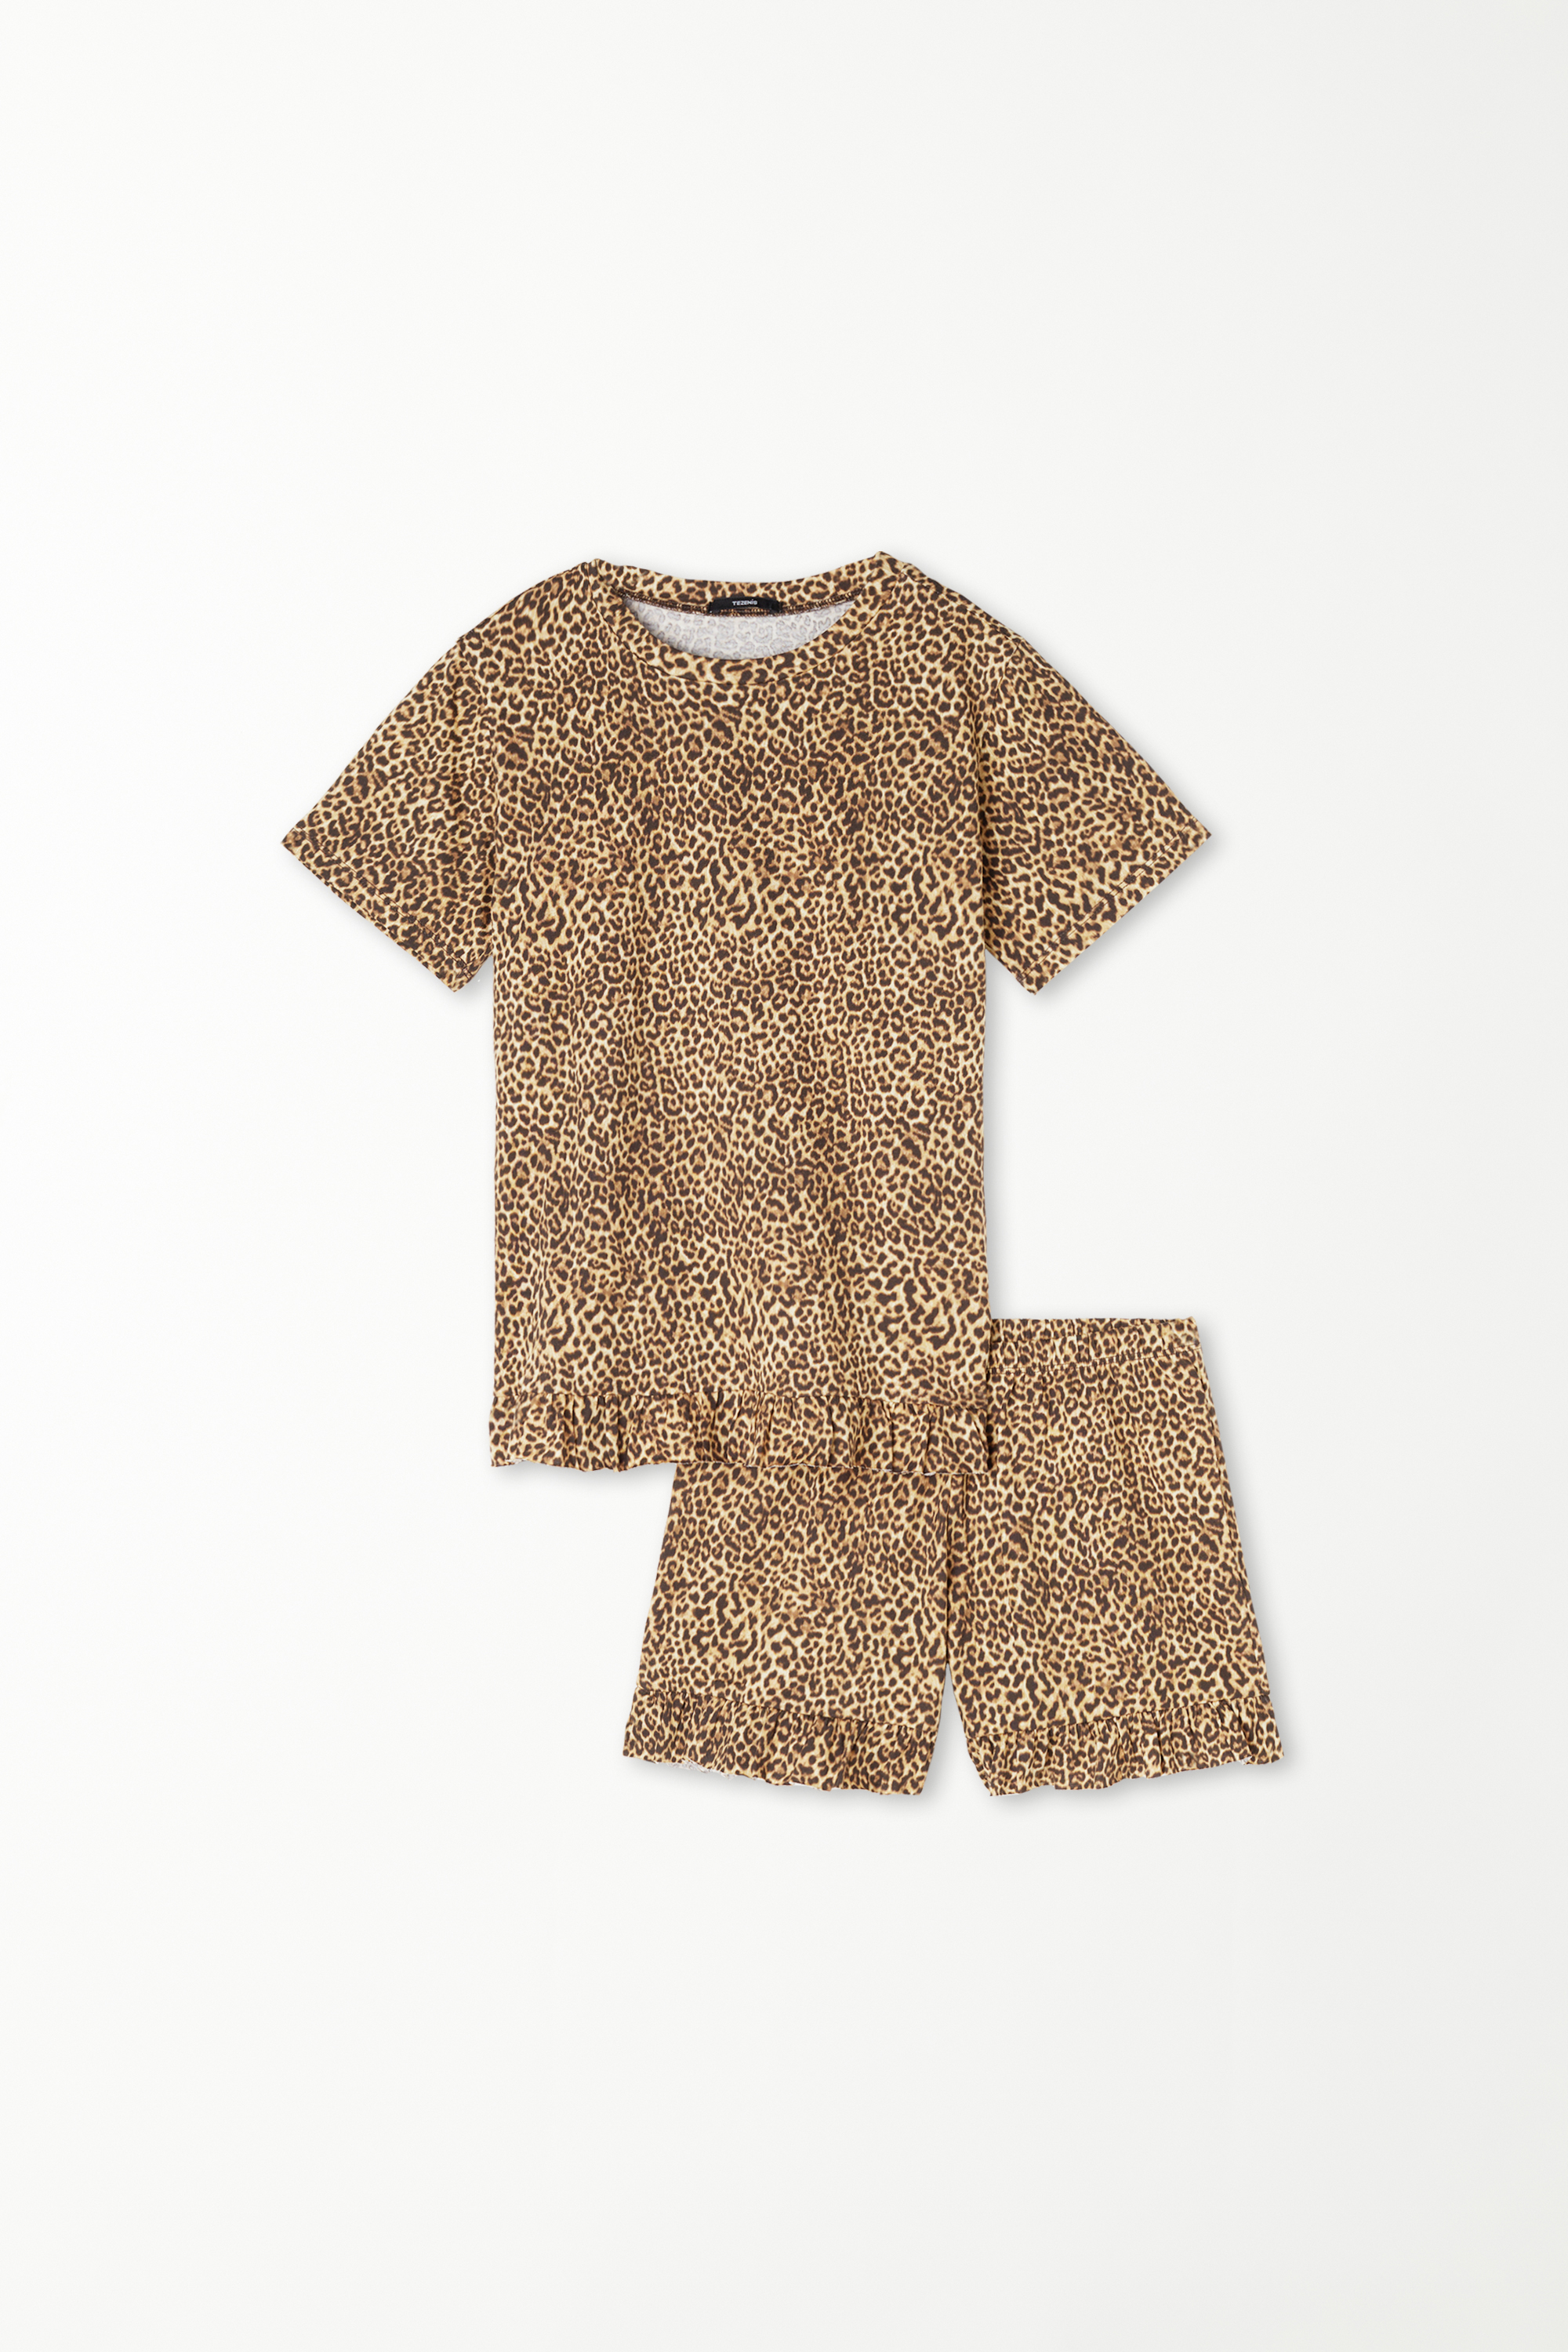 Girls’ Short Sleeve Short Cotton Pyjamas with Animal Print